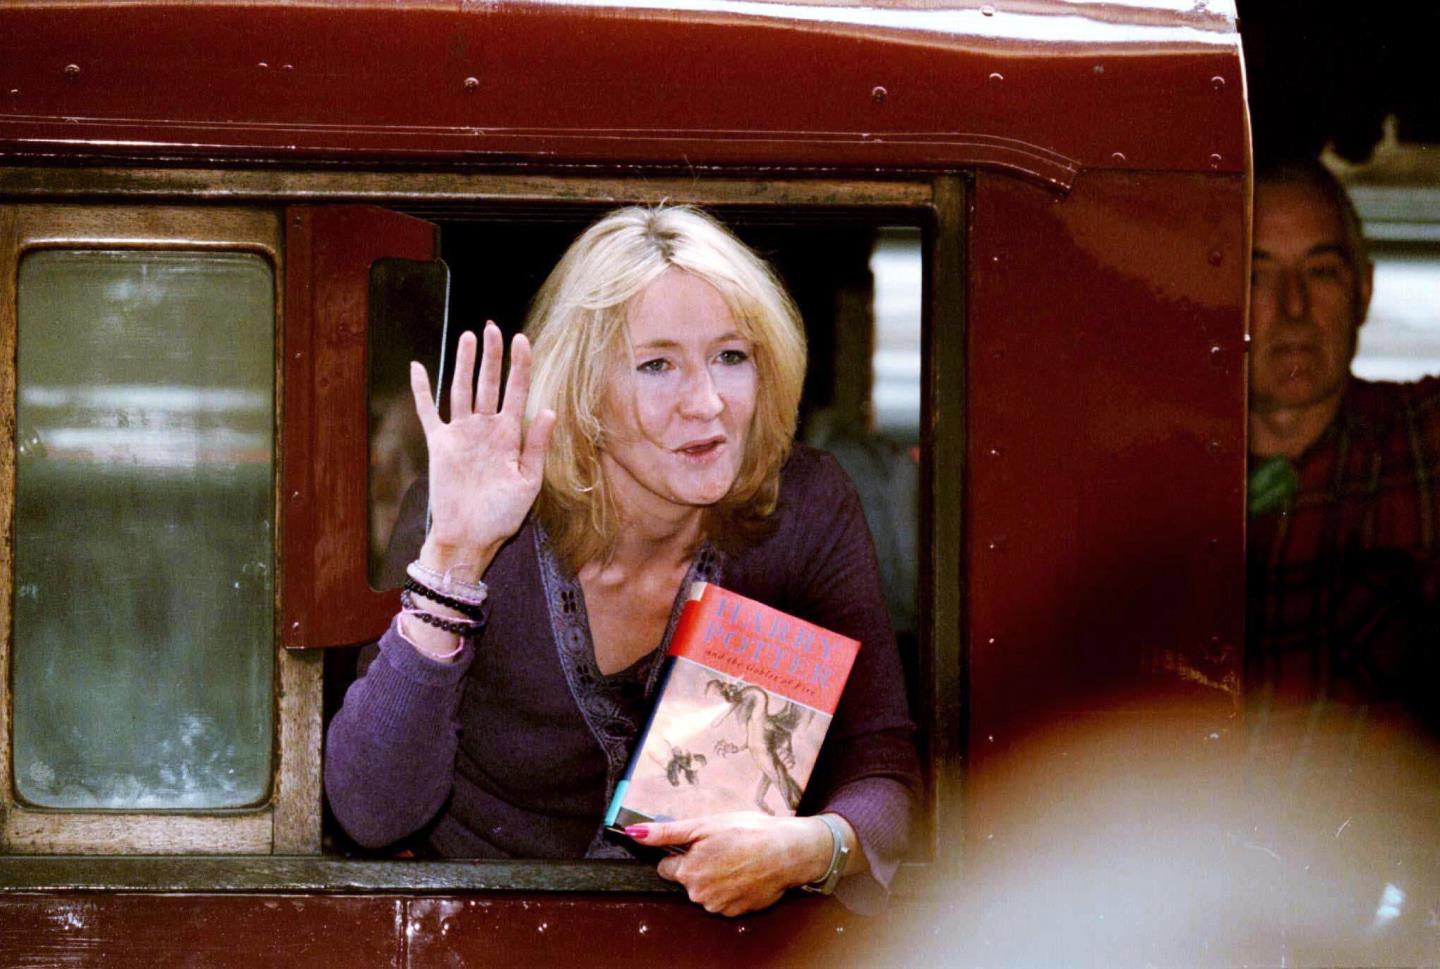 JK Rowling on a train.